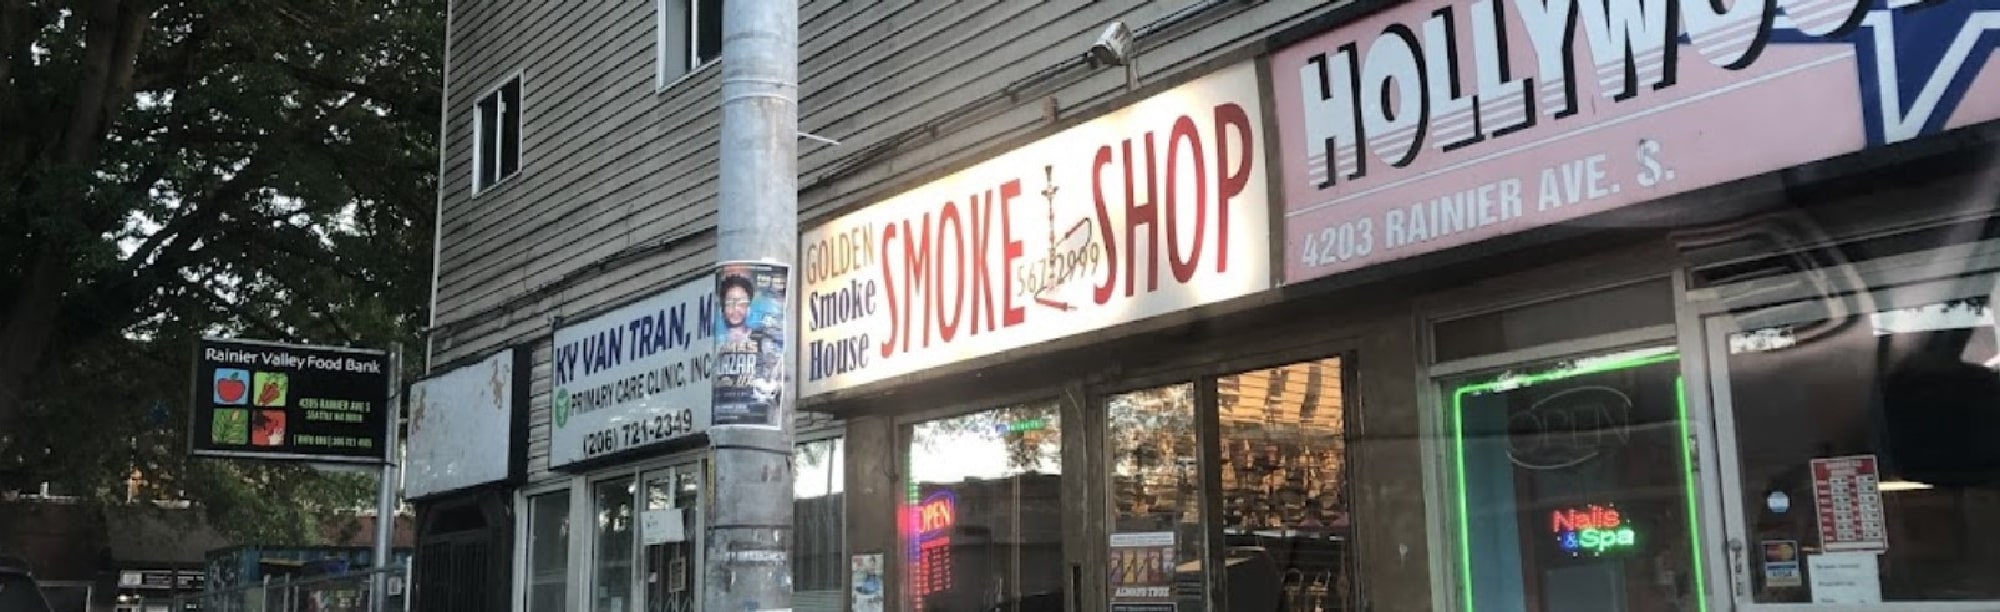 image of golden smoke shop in seattle wa